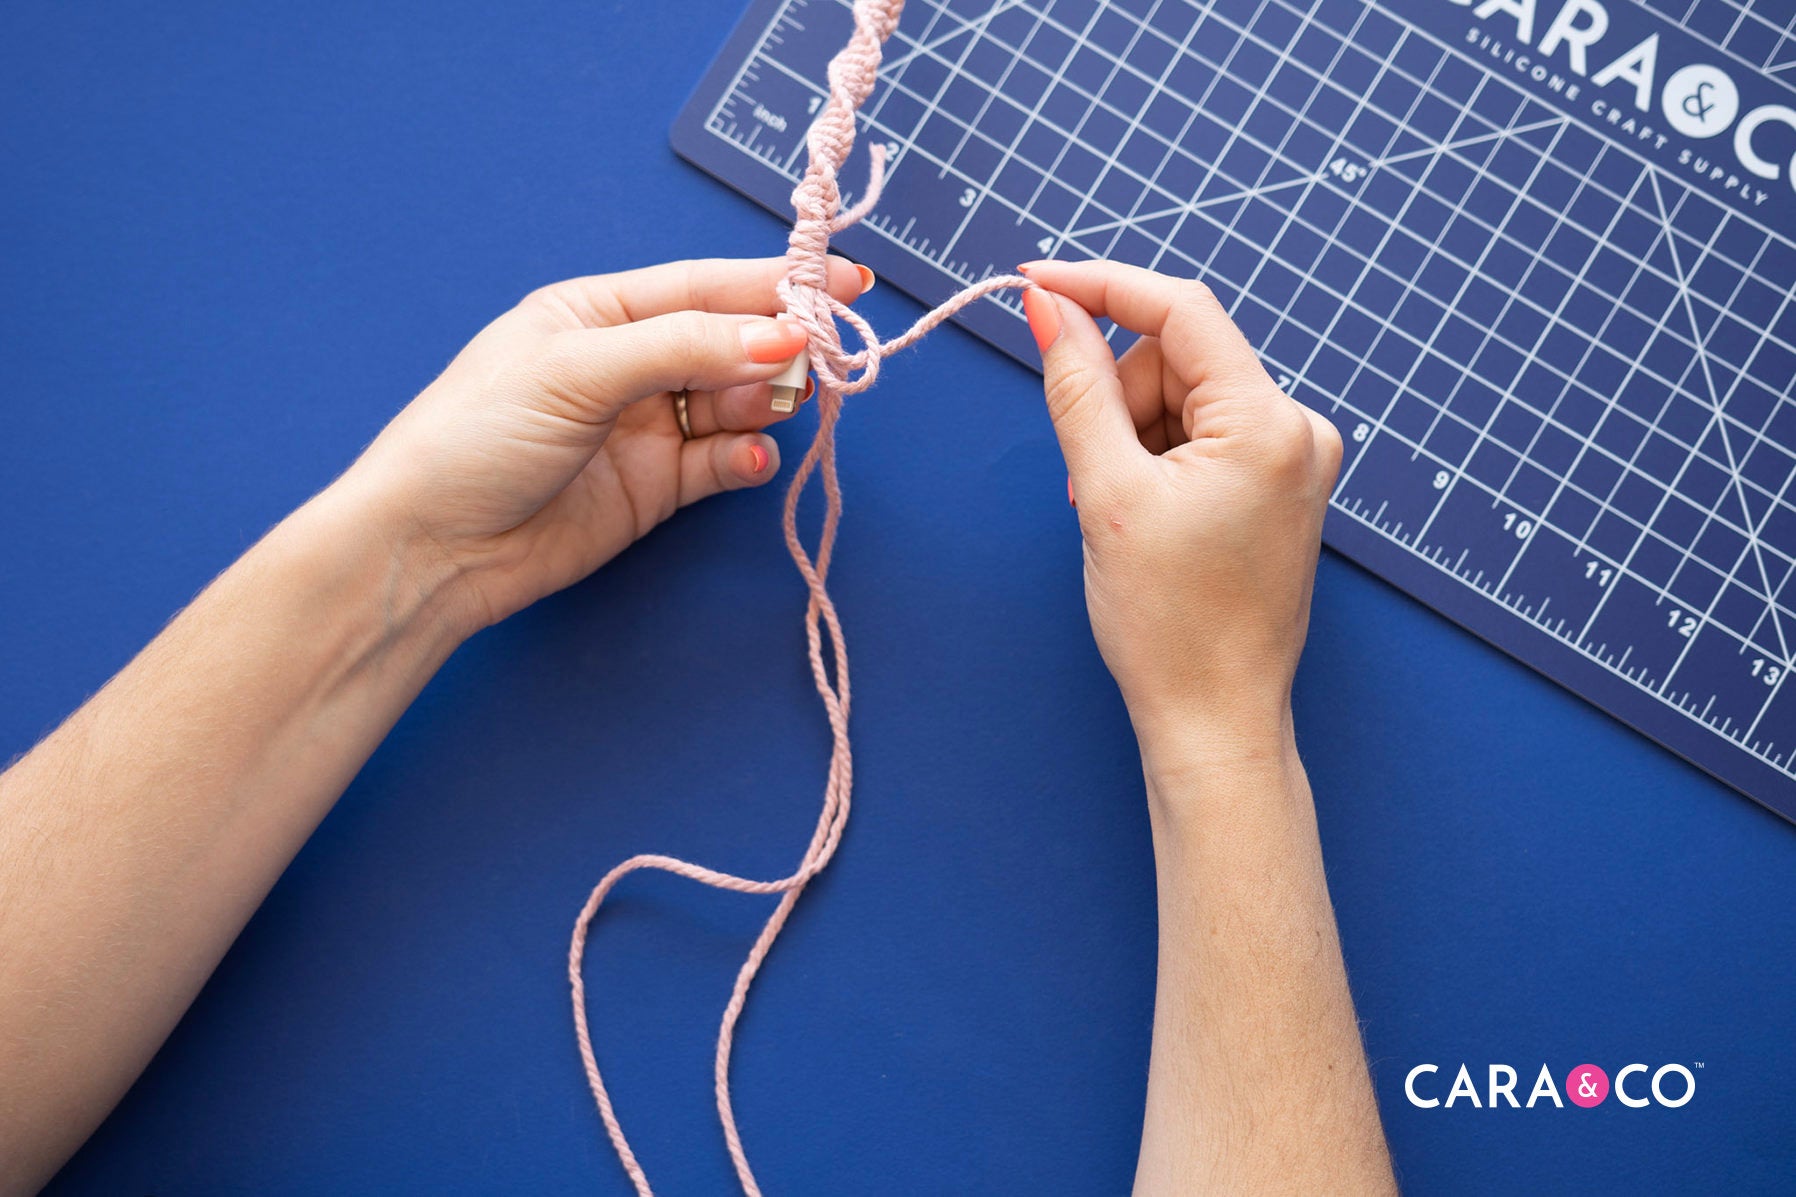 DIY macrame phone charger cord - Cara & Co